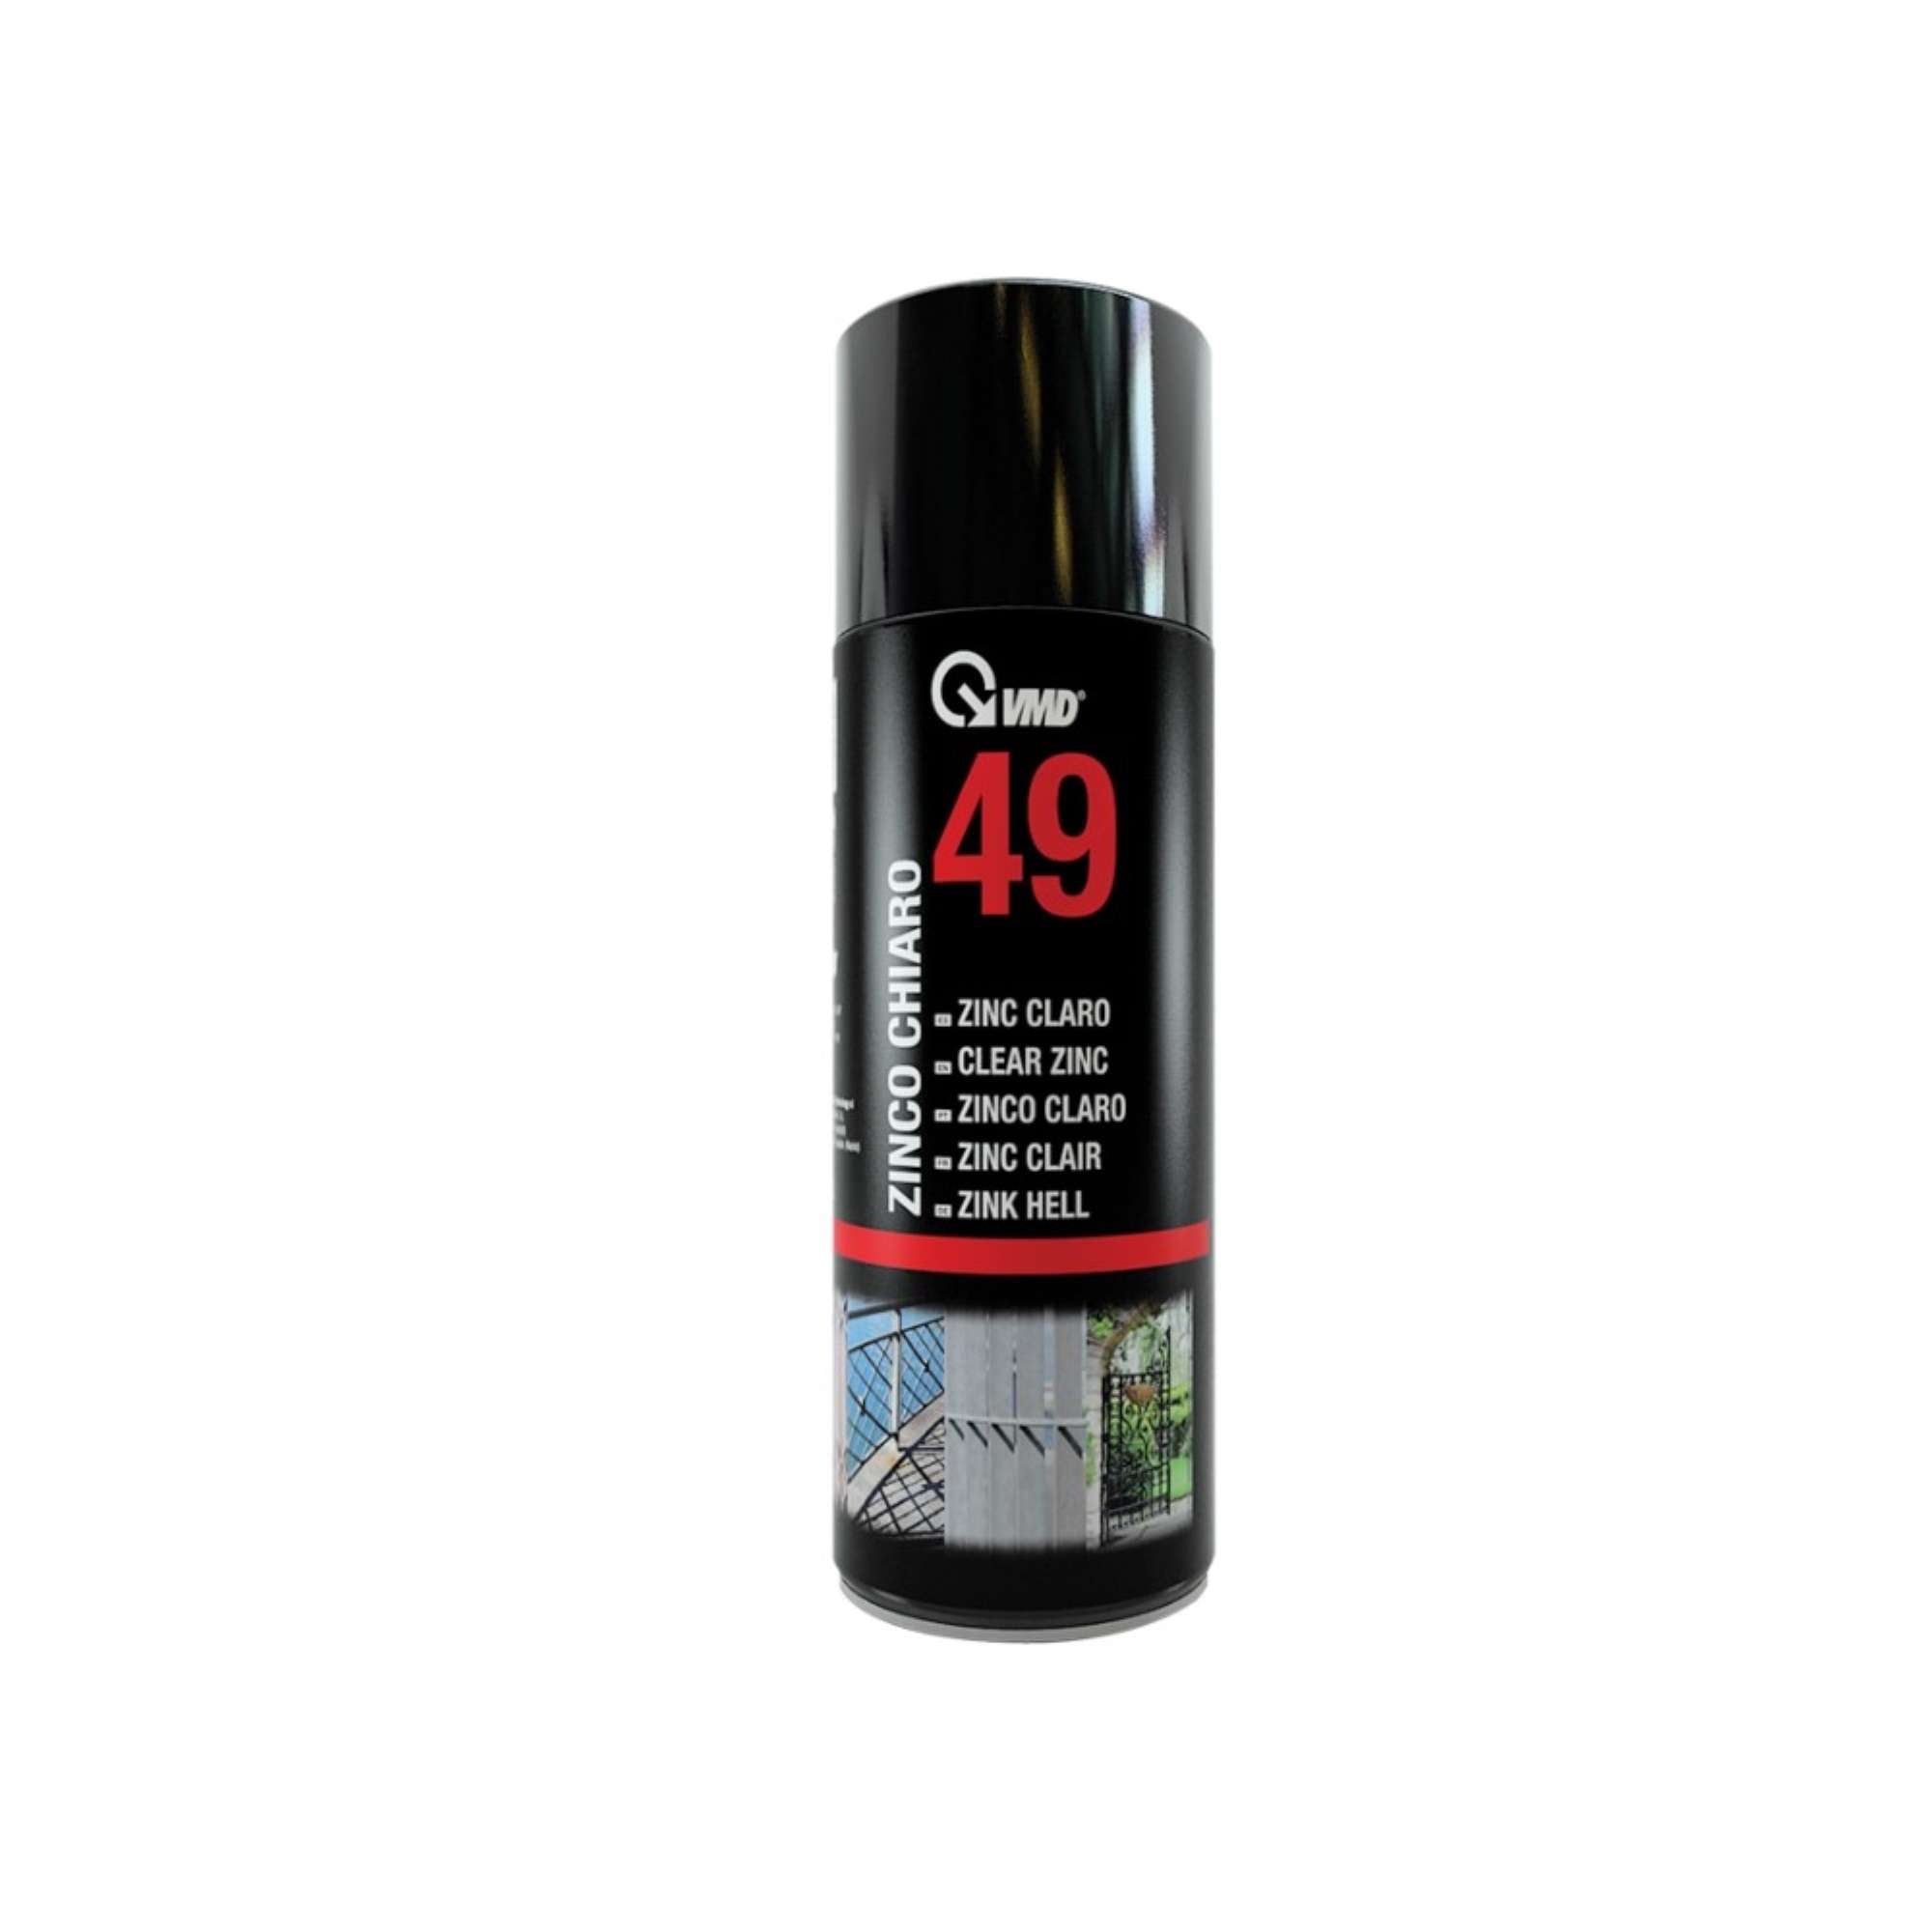 Zinco chiaro spray 400 ml - VMD 49